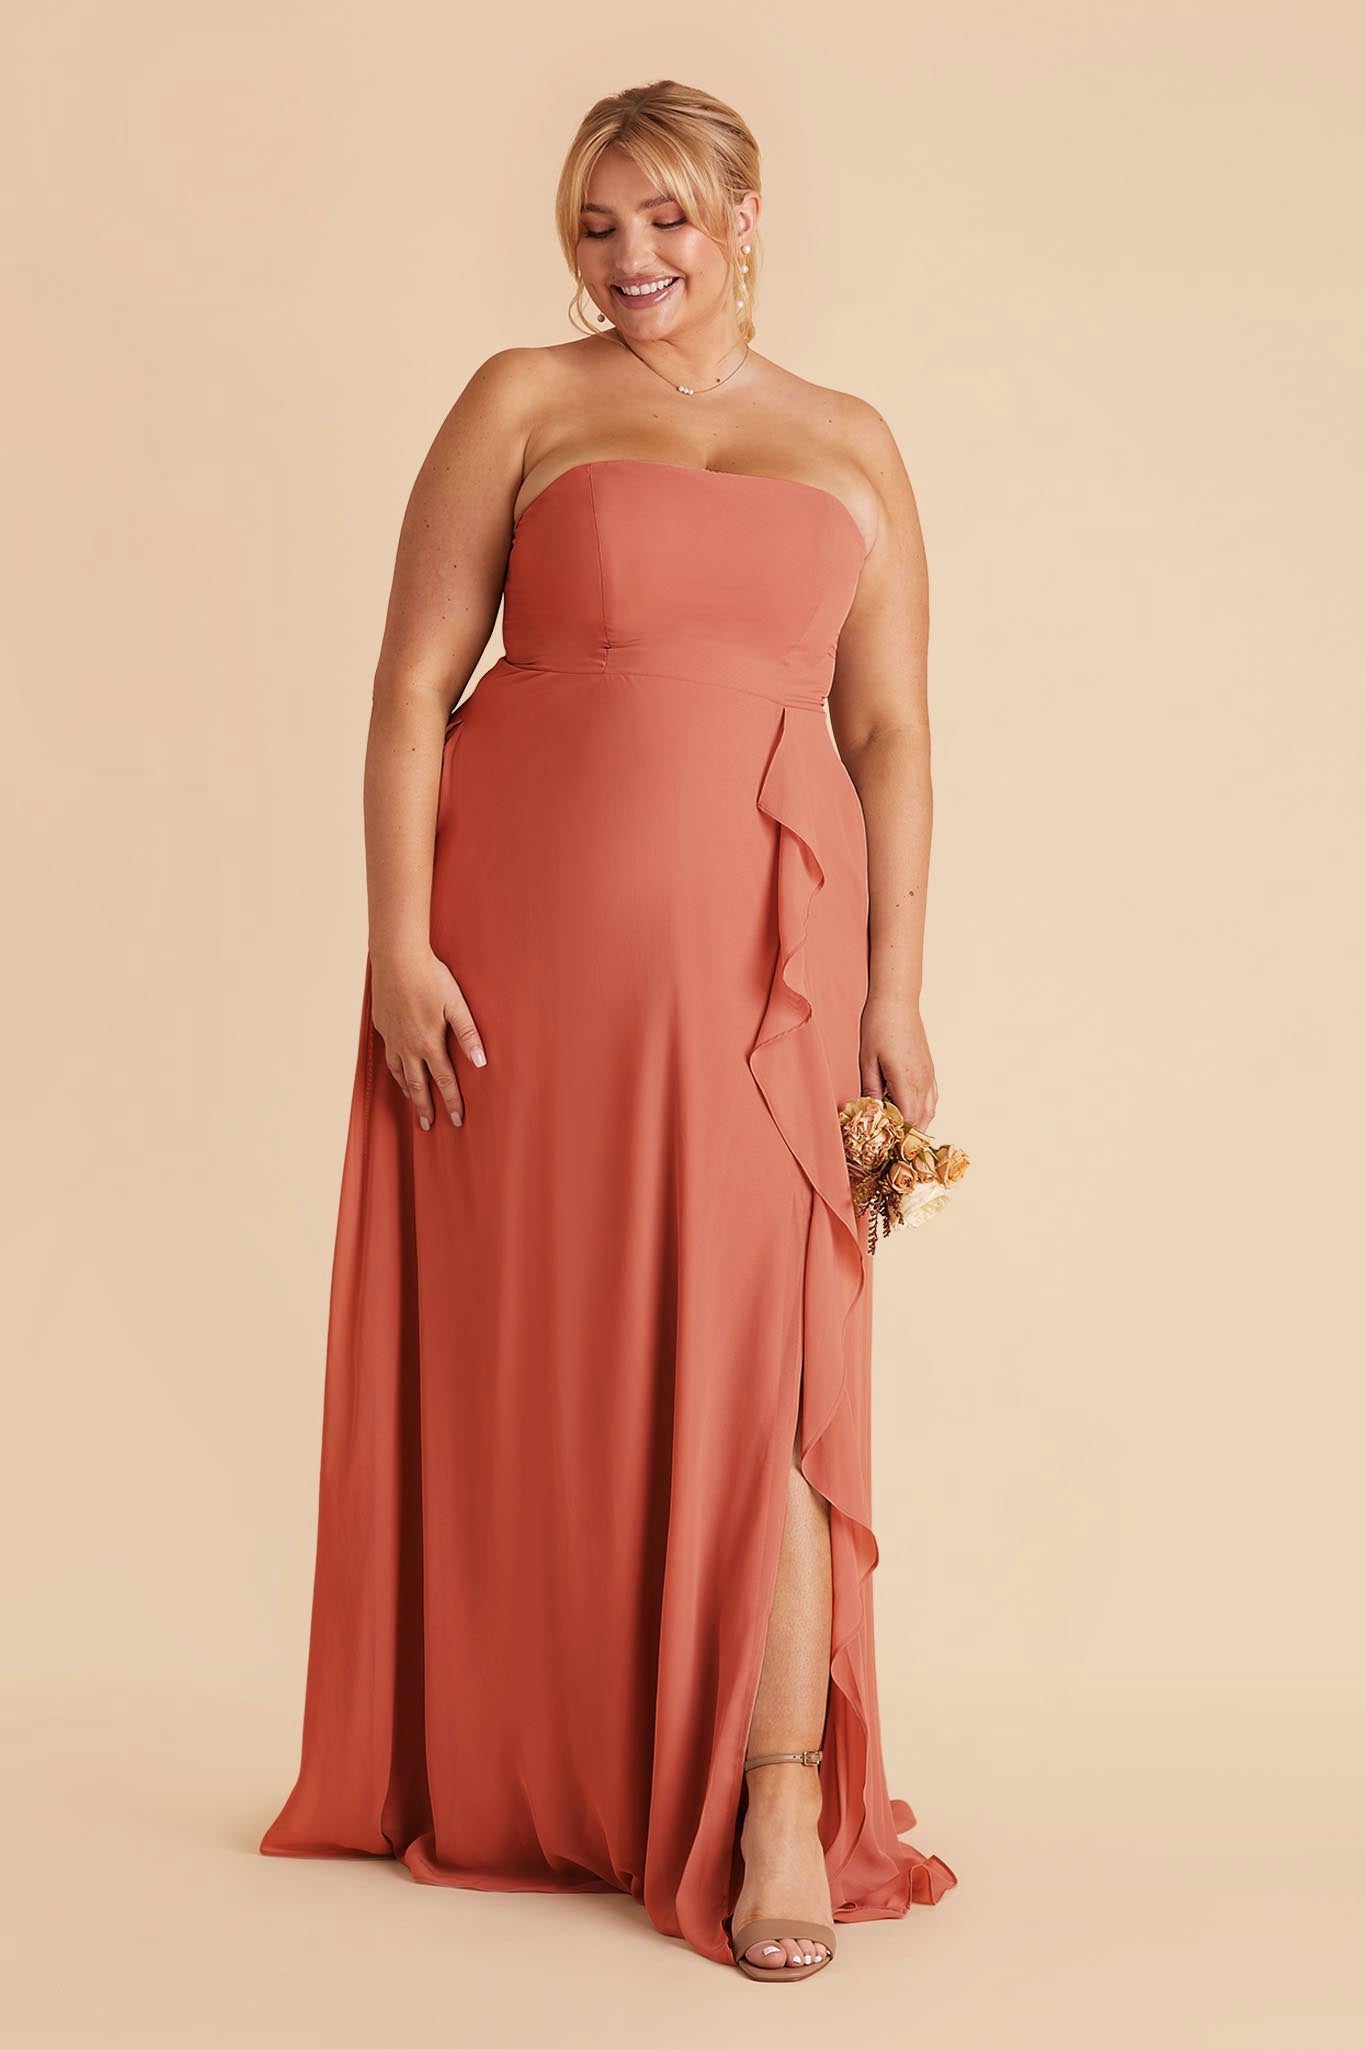 Winnie Convertible Chiffon Dress - Terracotta